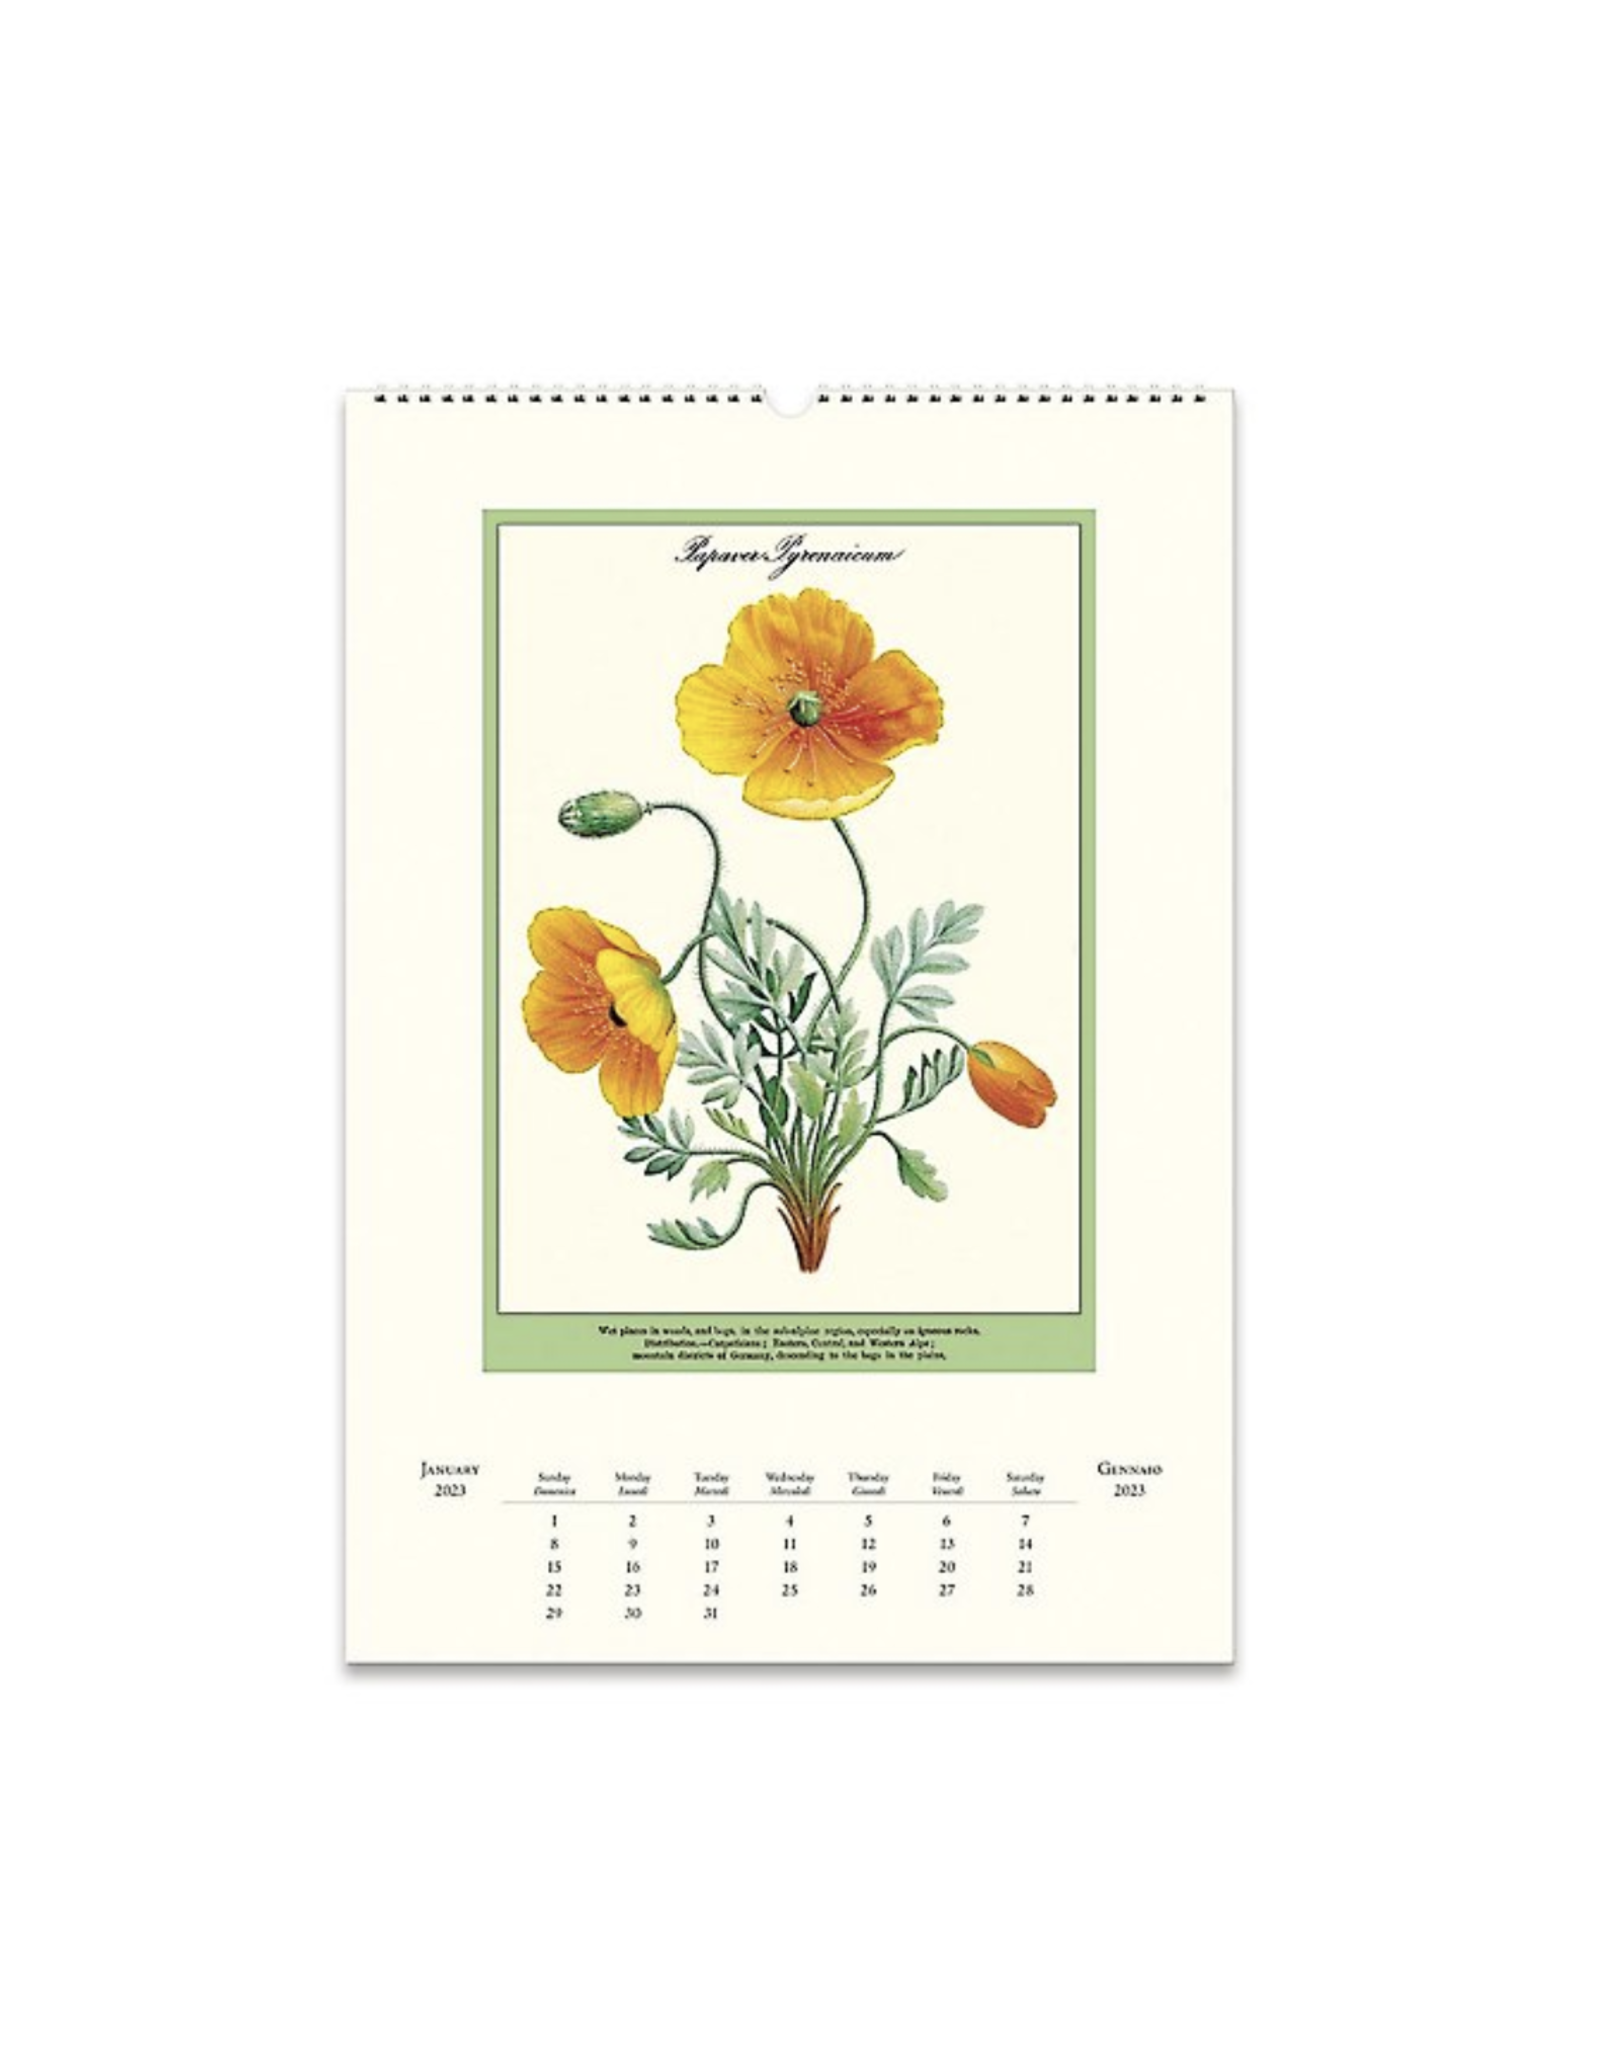 2023 Wall Calendar : Wildflowers